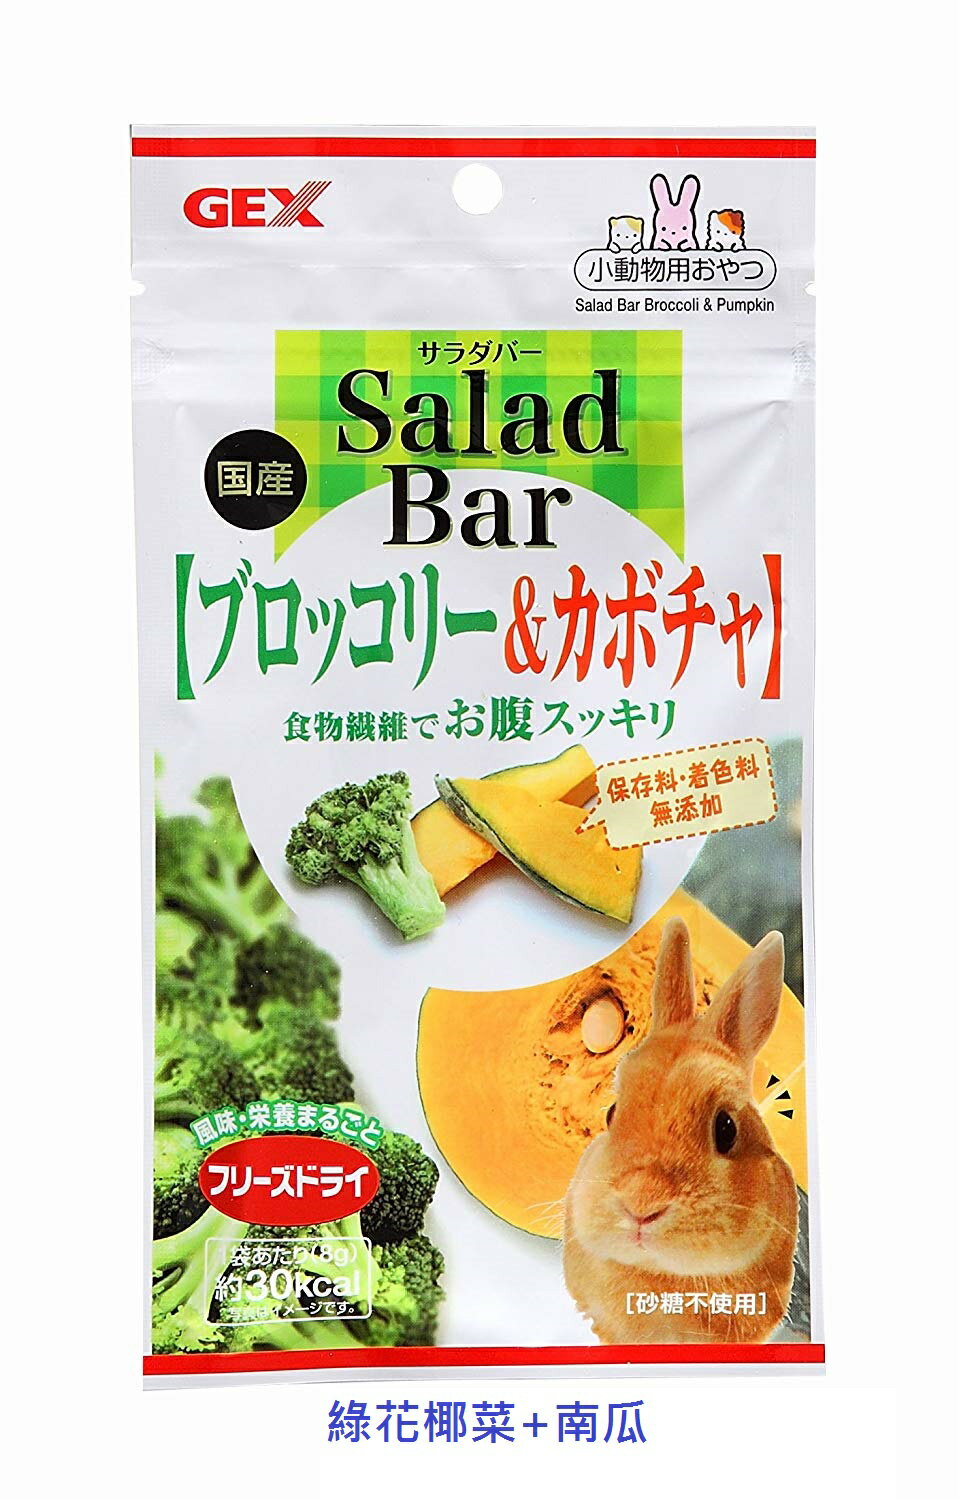 GEX Salad Bar 沙拉總匯 7856 綠花椰菜+南瓜 日本國產